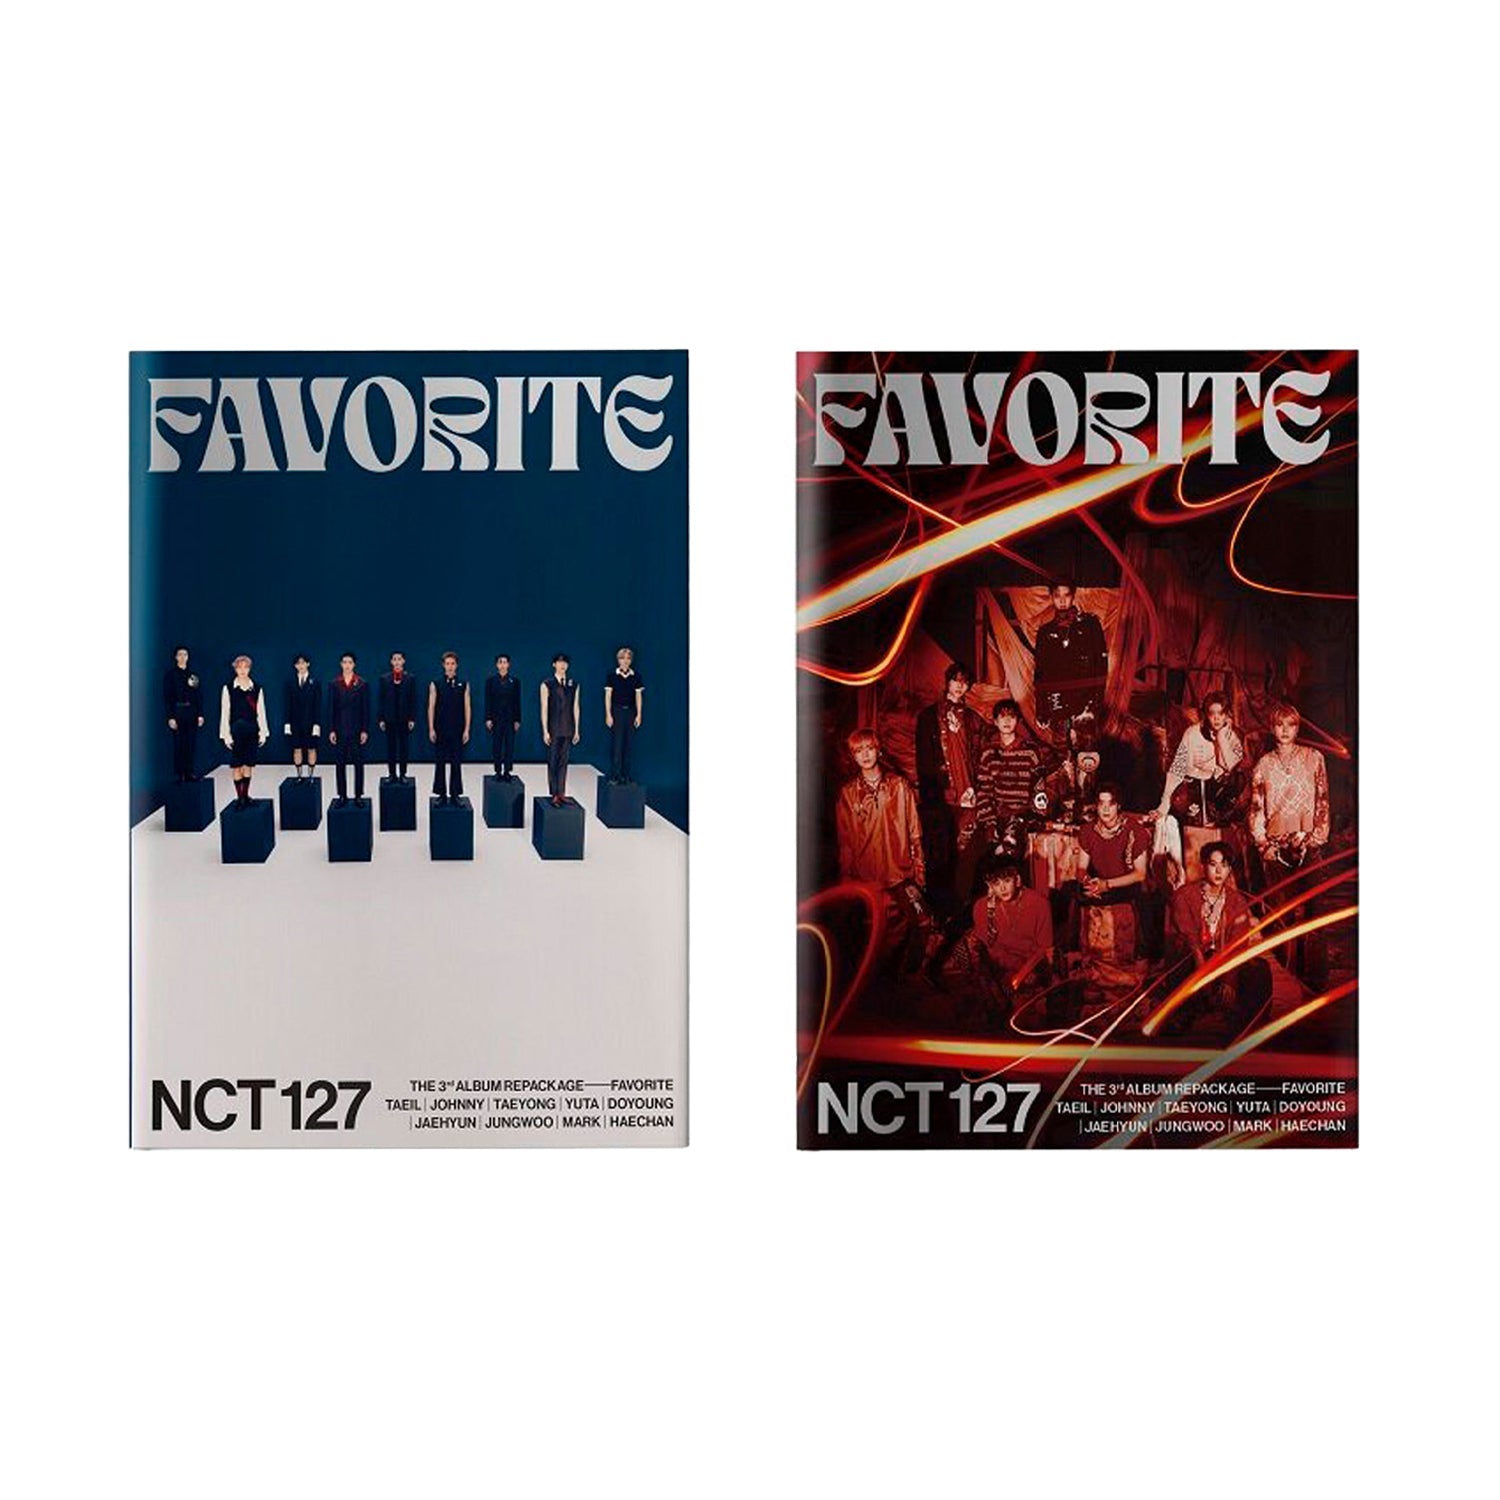 NCT 127 3RD ALBUM REPACKAGE 'FAVORITE' SET COVER